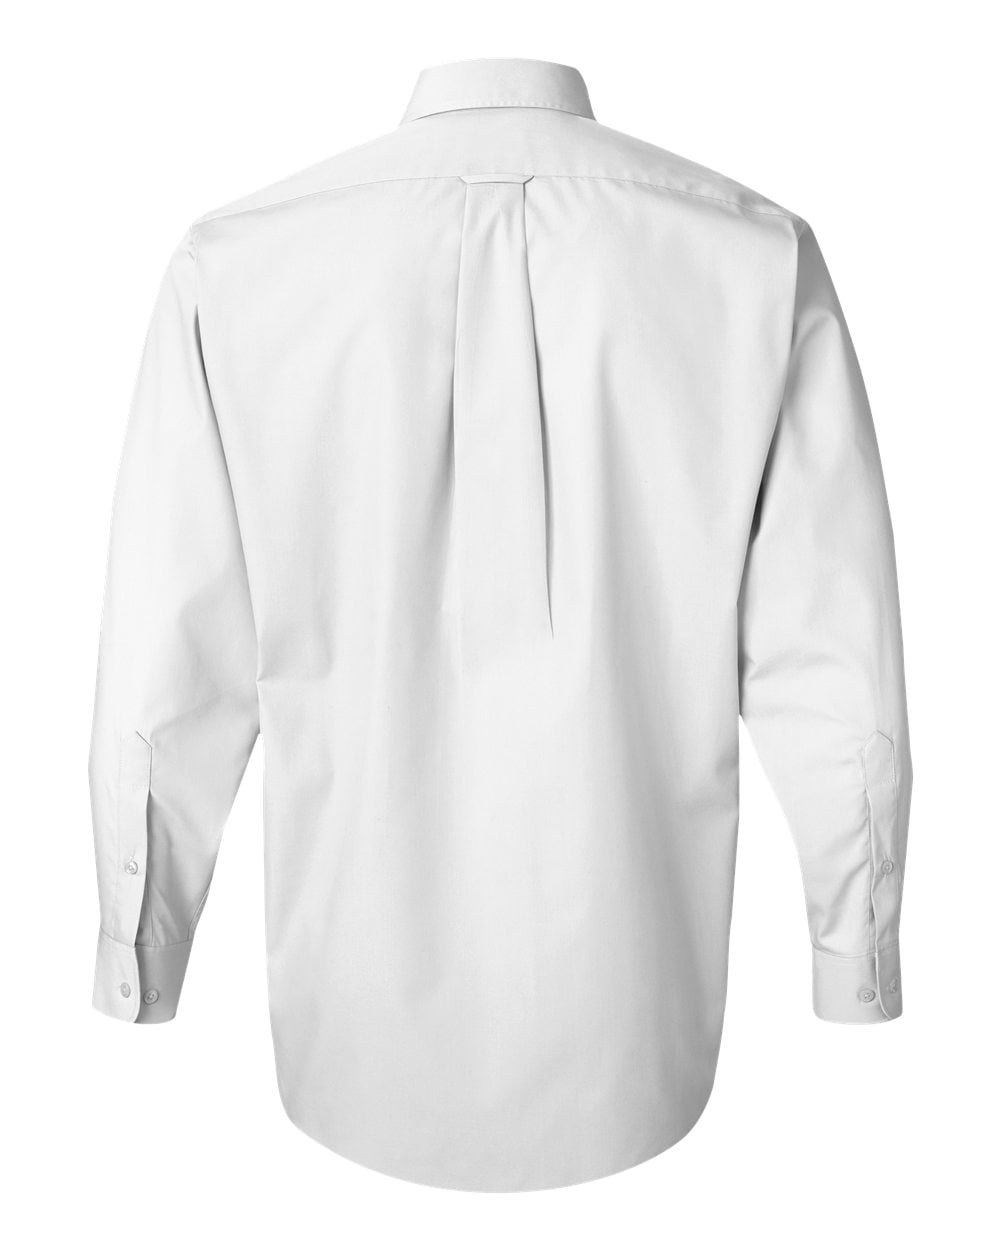 Van Heusen Silky Poplin Shirt Size up to 3XL